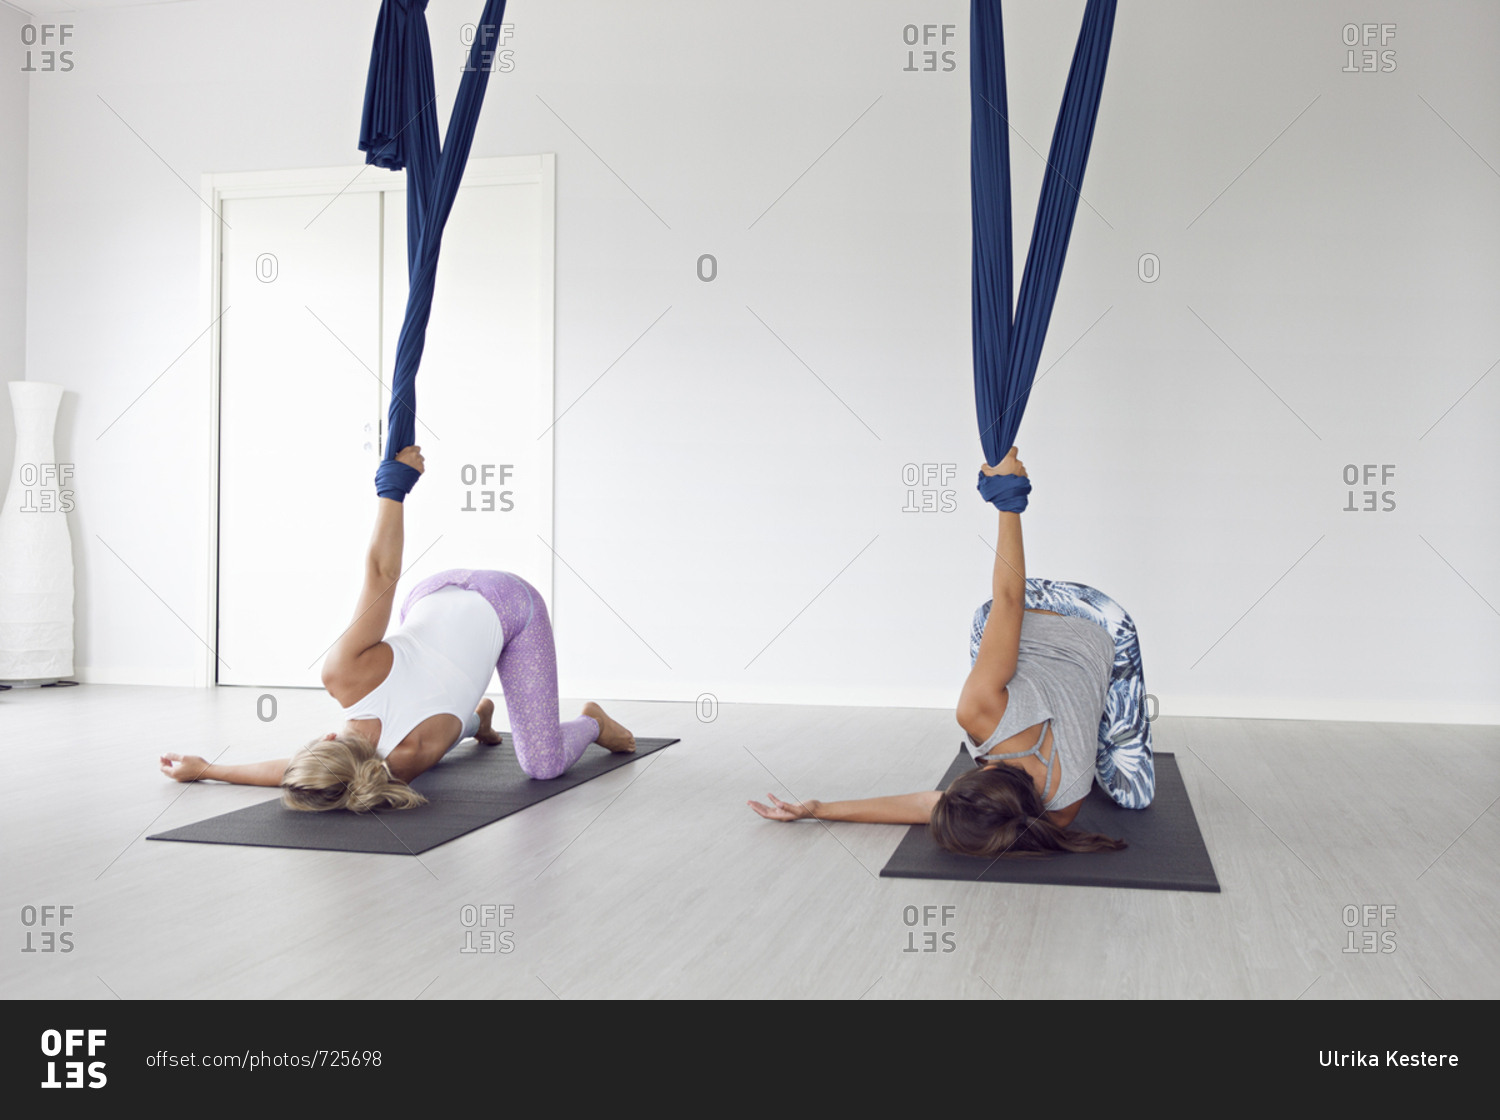 Women using yoga mats and aerial yoga strap